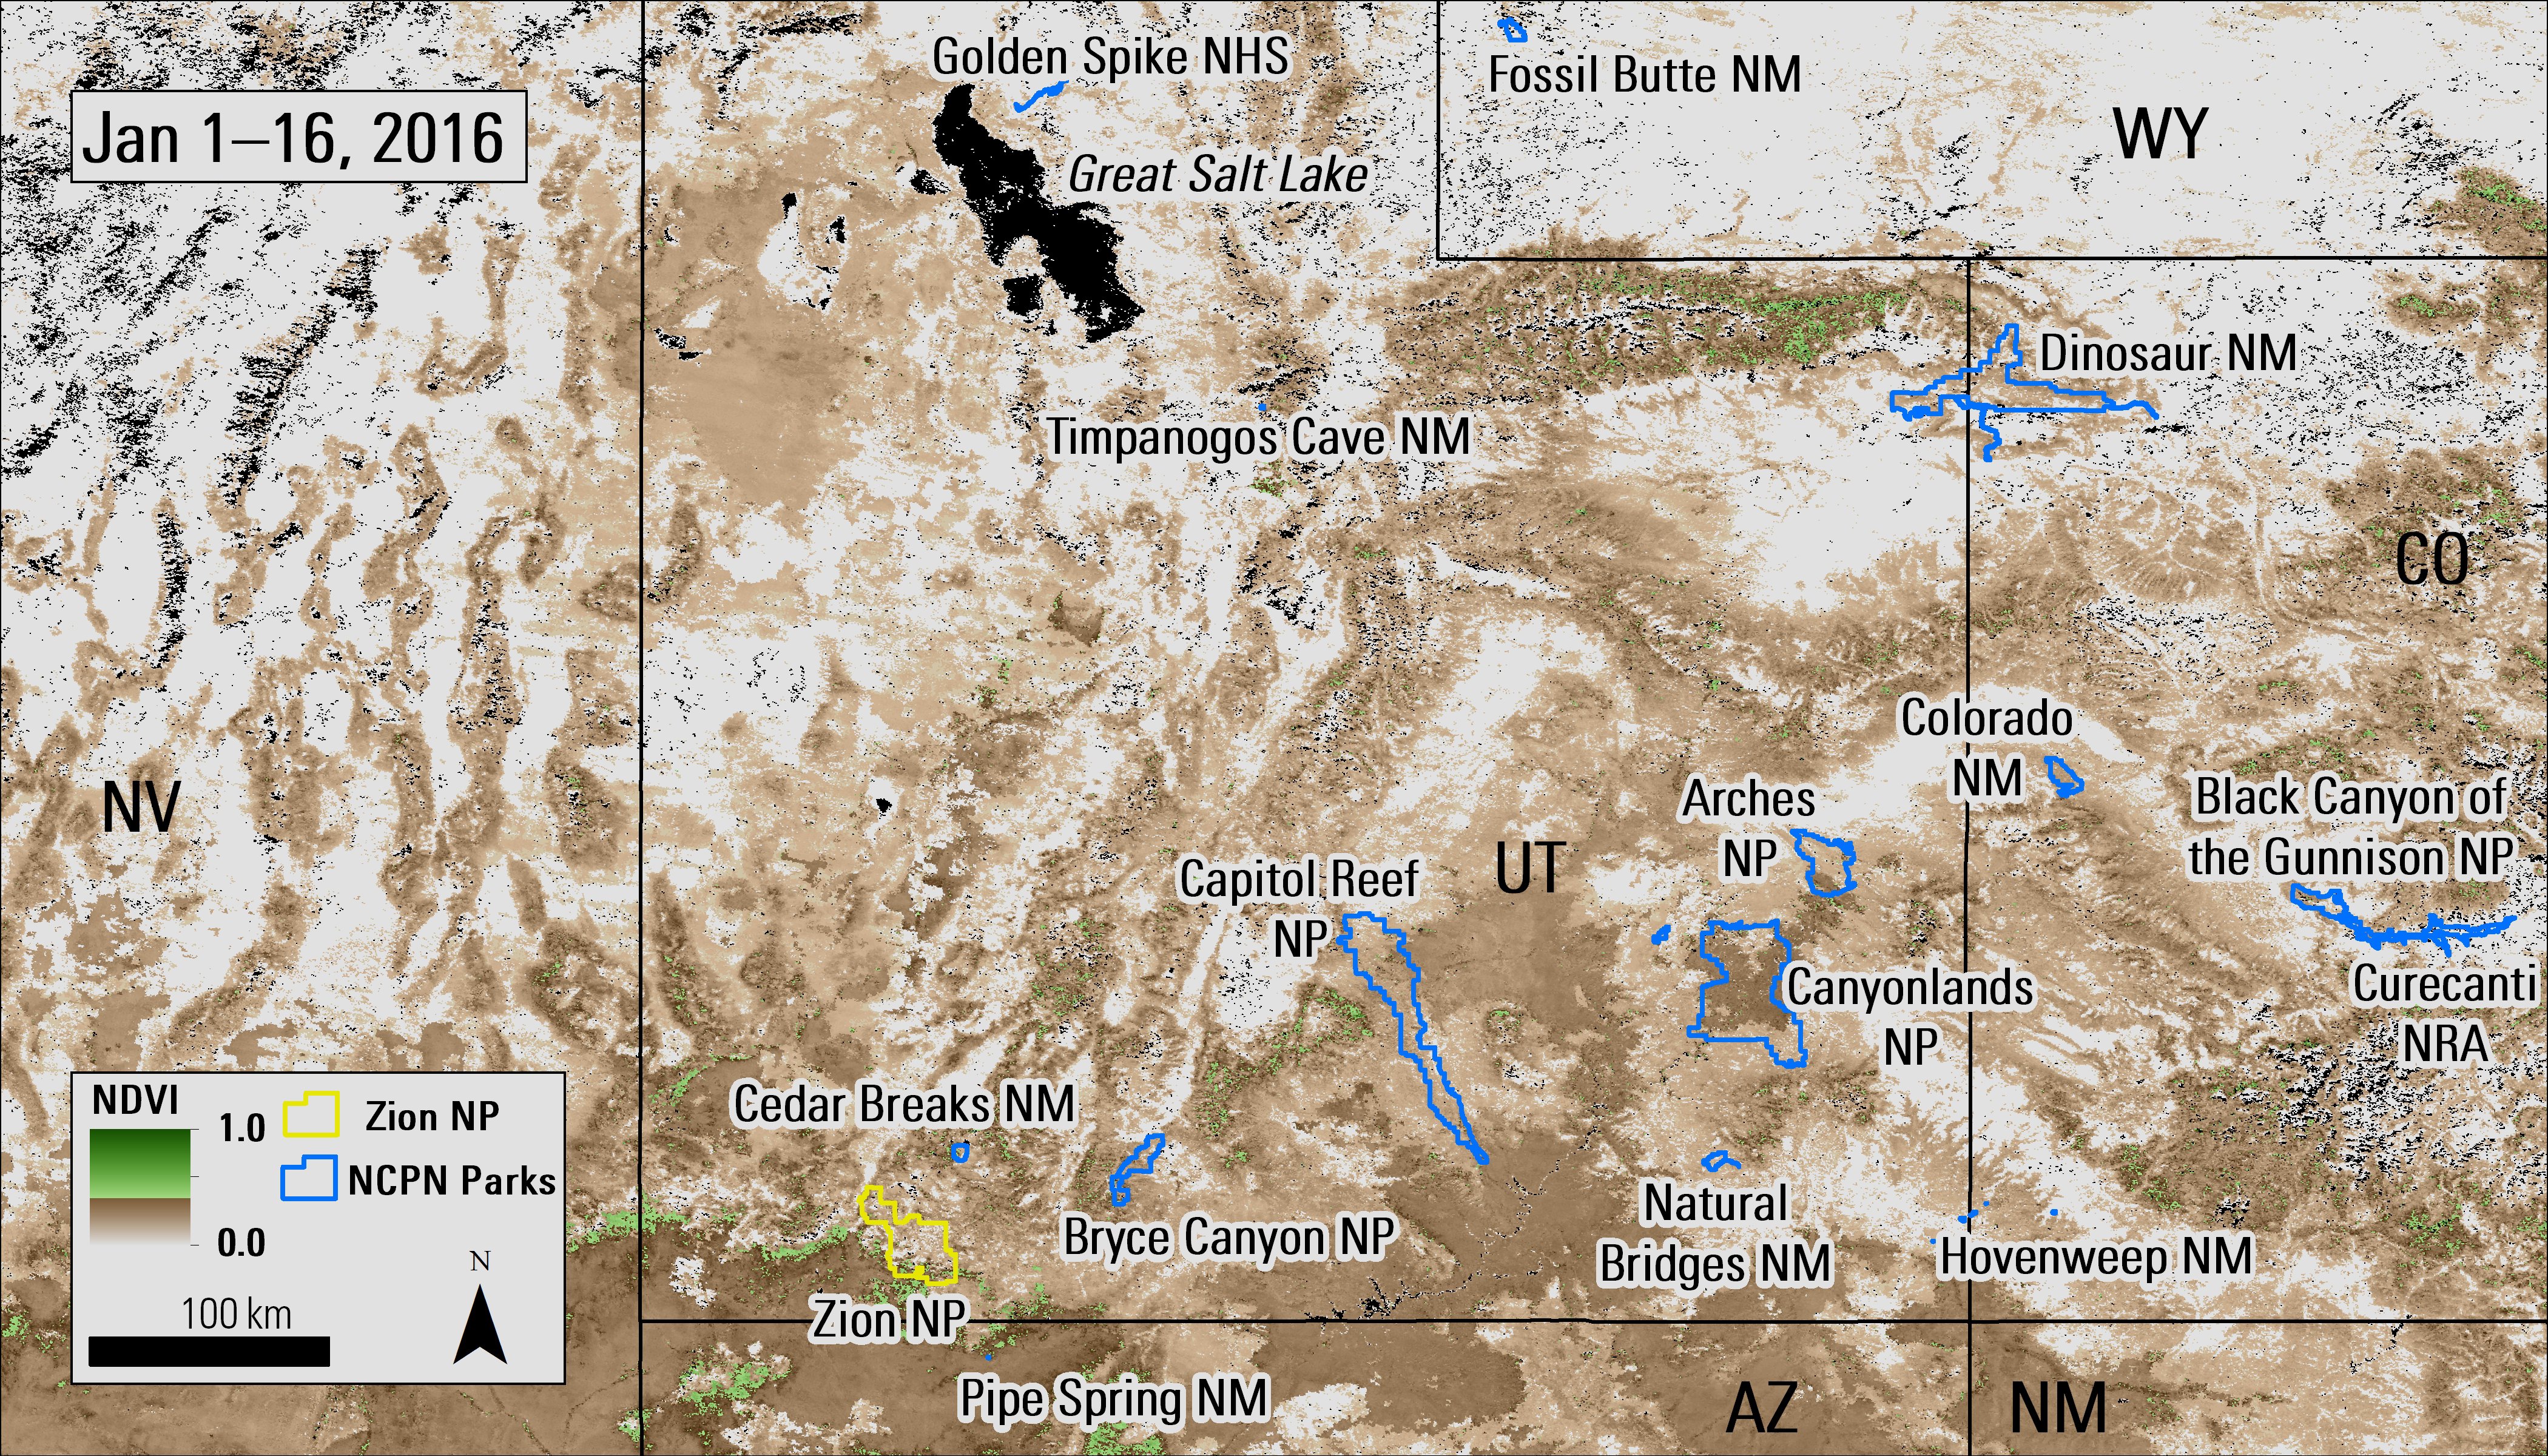 MODIS NDVI (MOD13Q1) composite image over Utah from January 16, 2016.